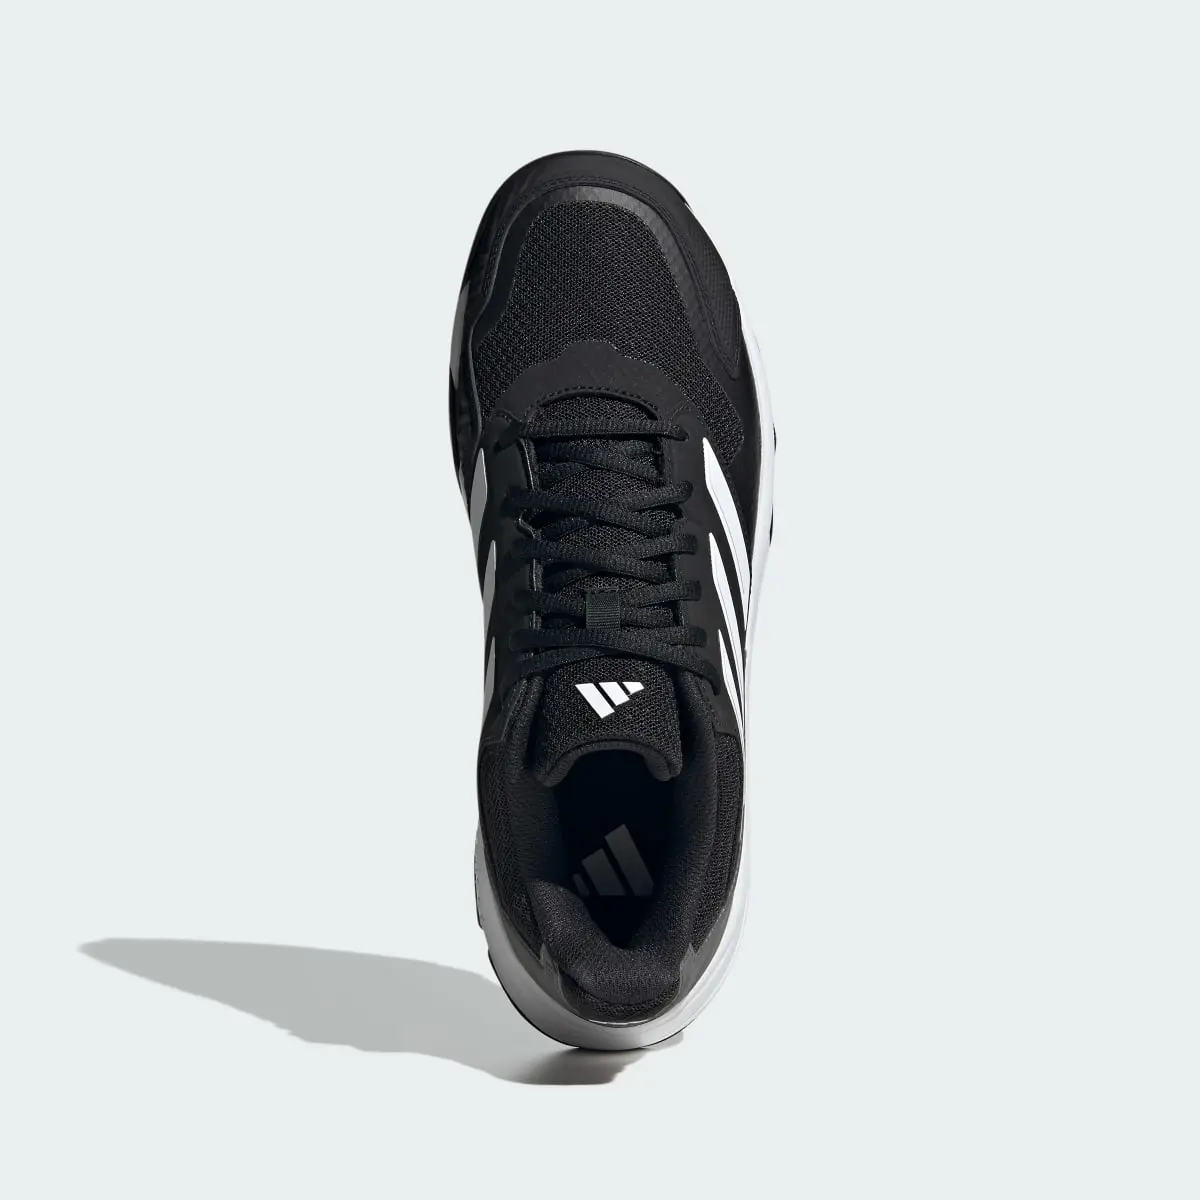 Adidas Courtjam Control 3 Tenis Ayakkabısı. 3